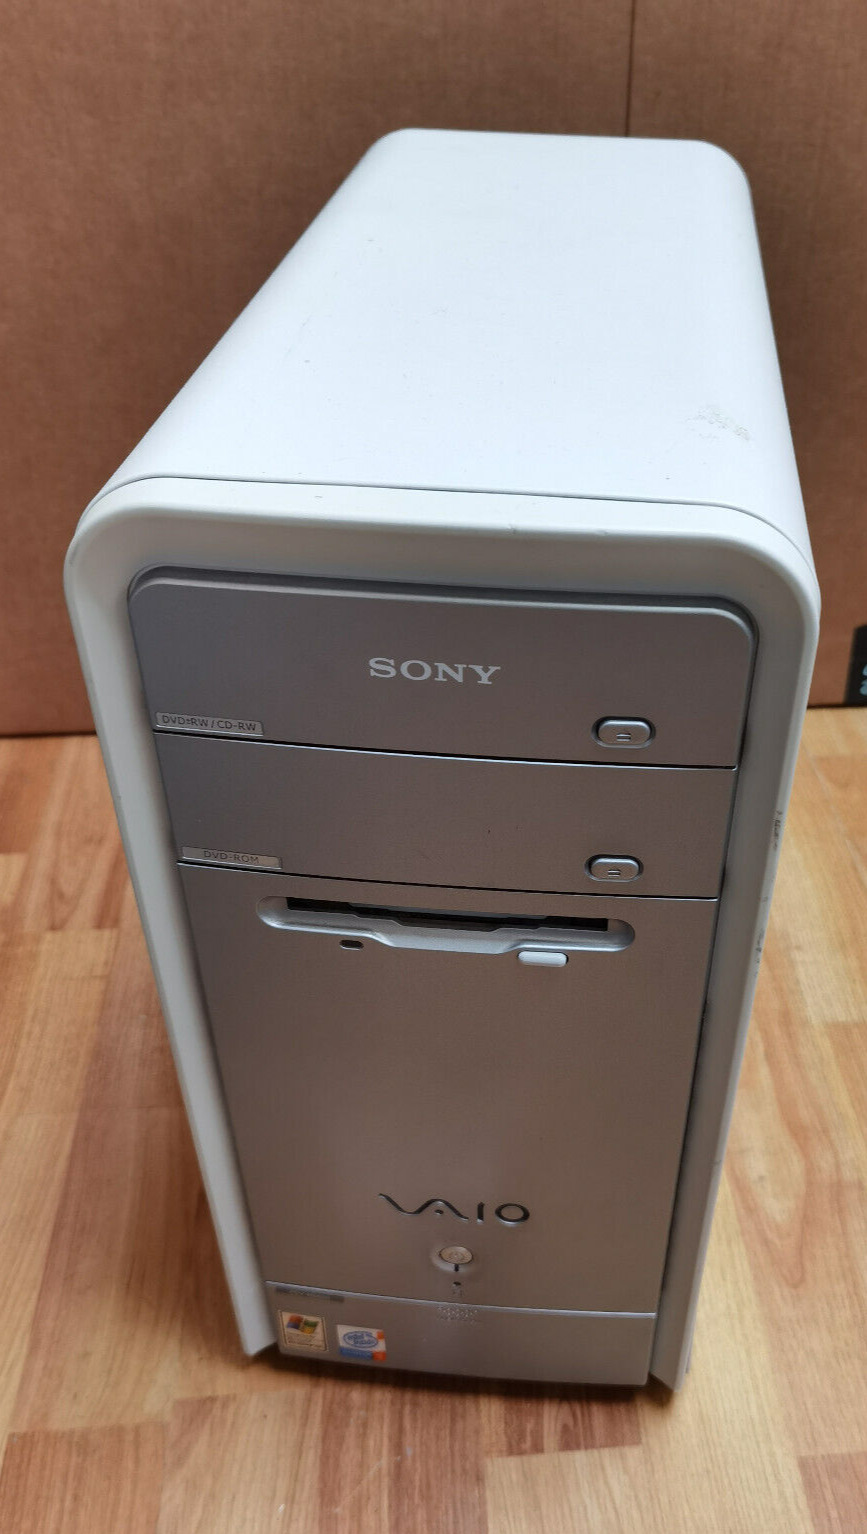 Sony VAIO PCV-2242 Desktop Pentium 4 512mb 160GB Windows XP Home 32 3GHz 